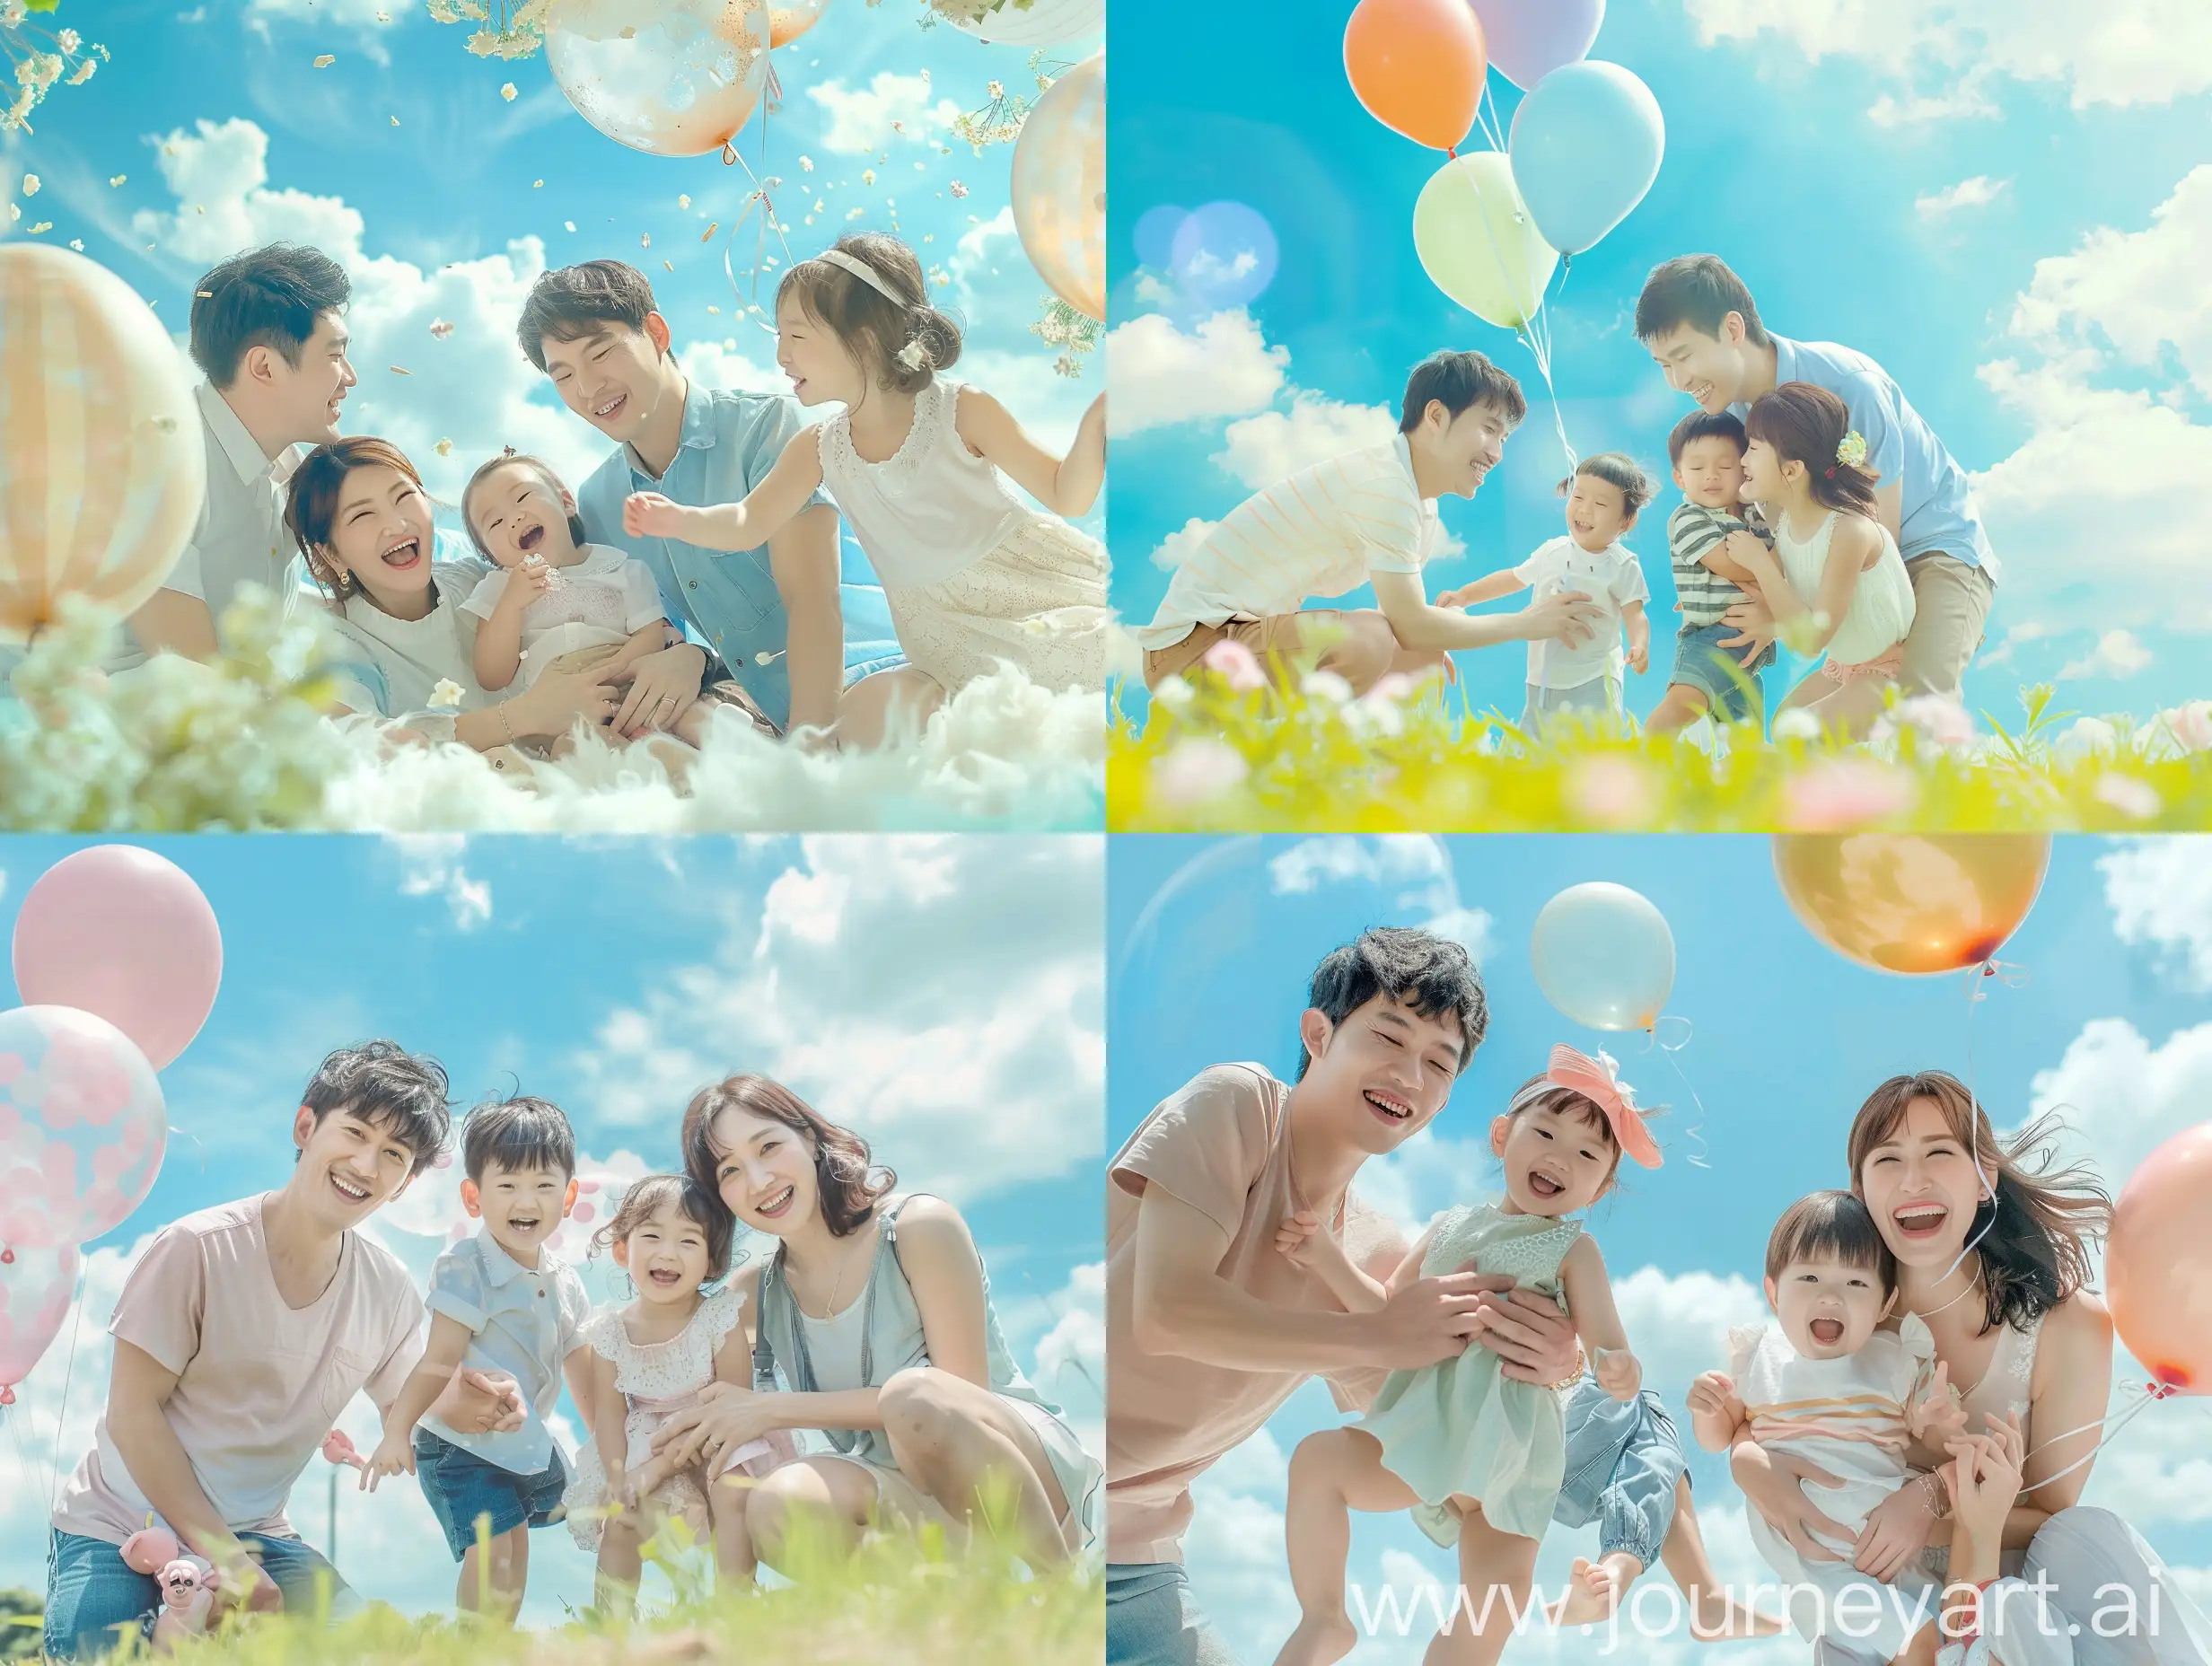 Joyful-Family-Fun-Outdoor-Playtime-with-Balloons